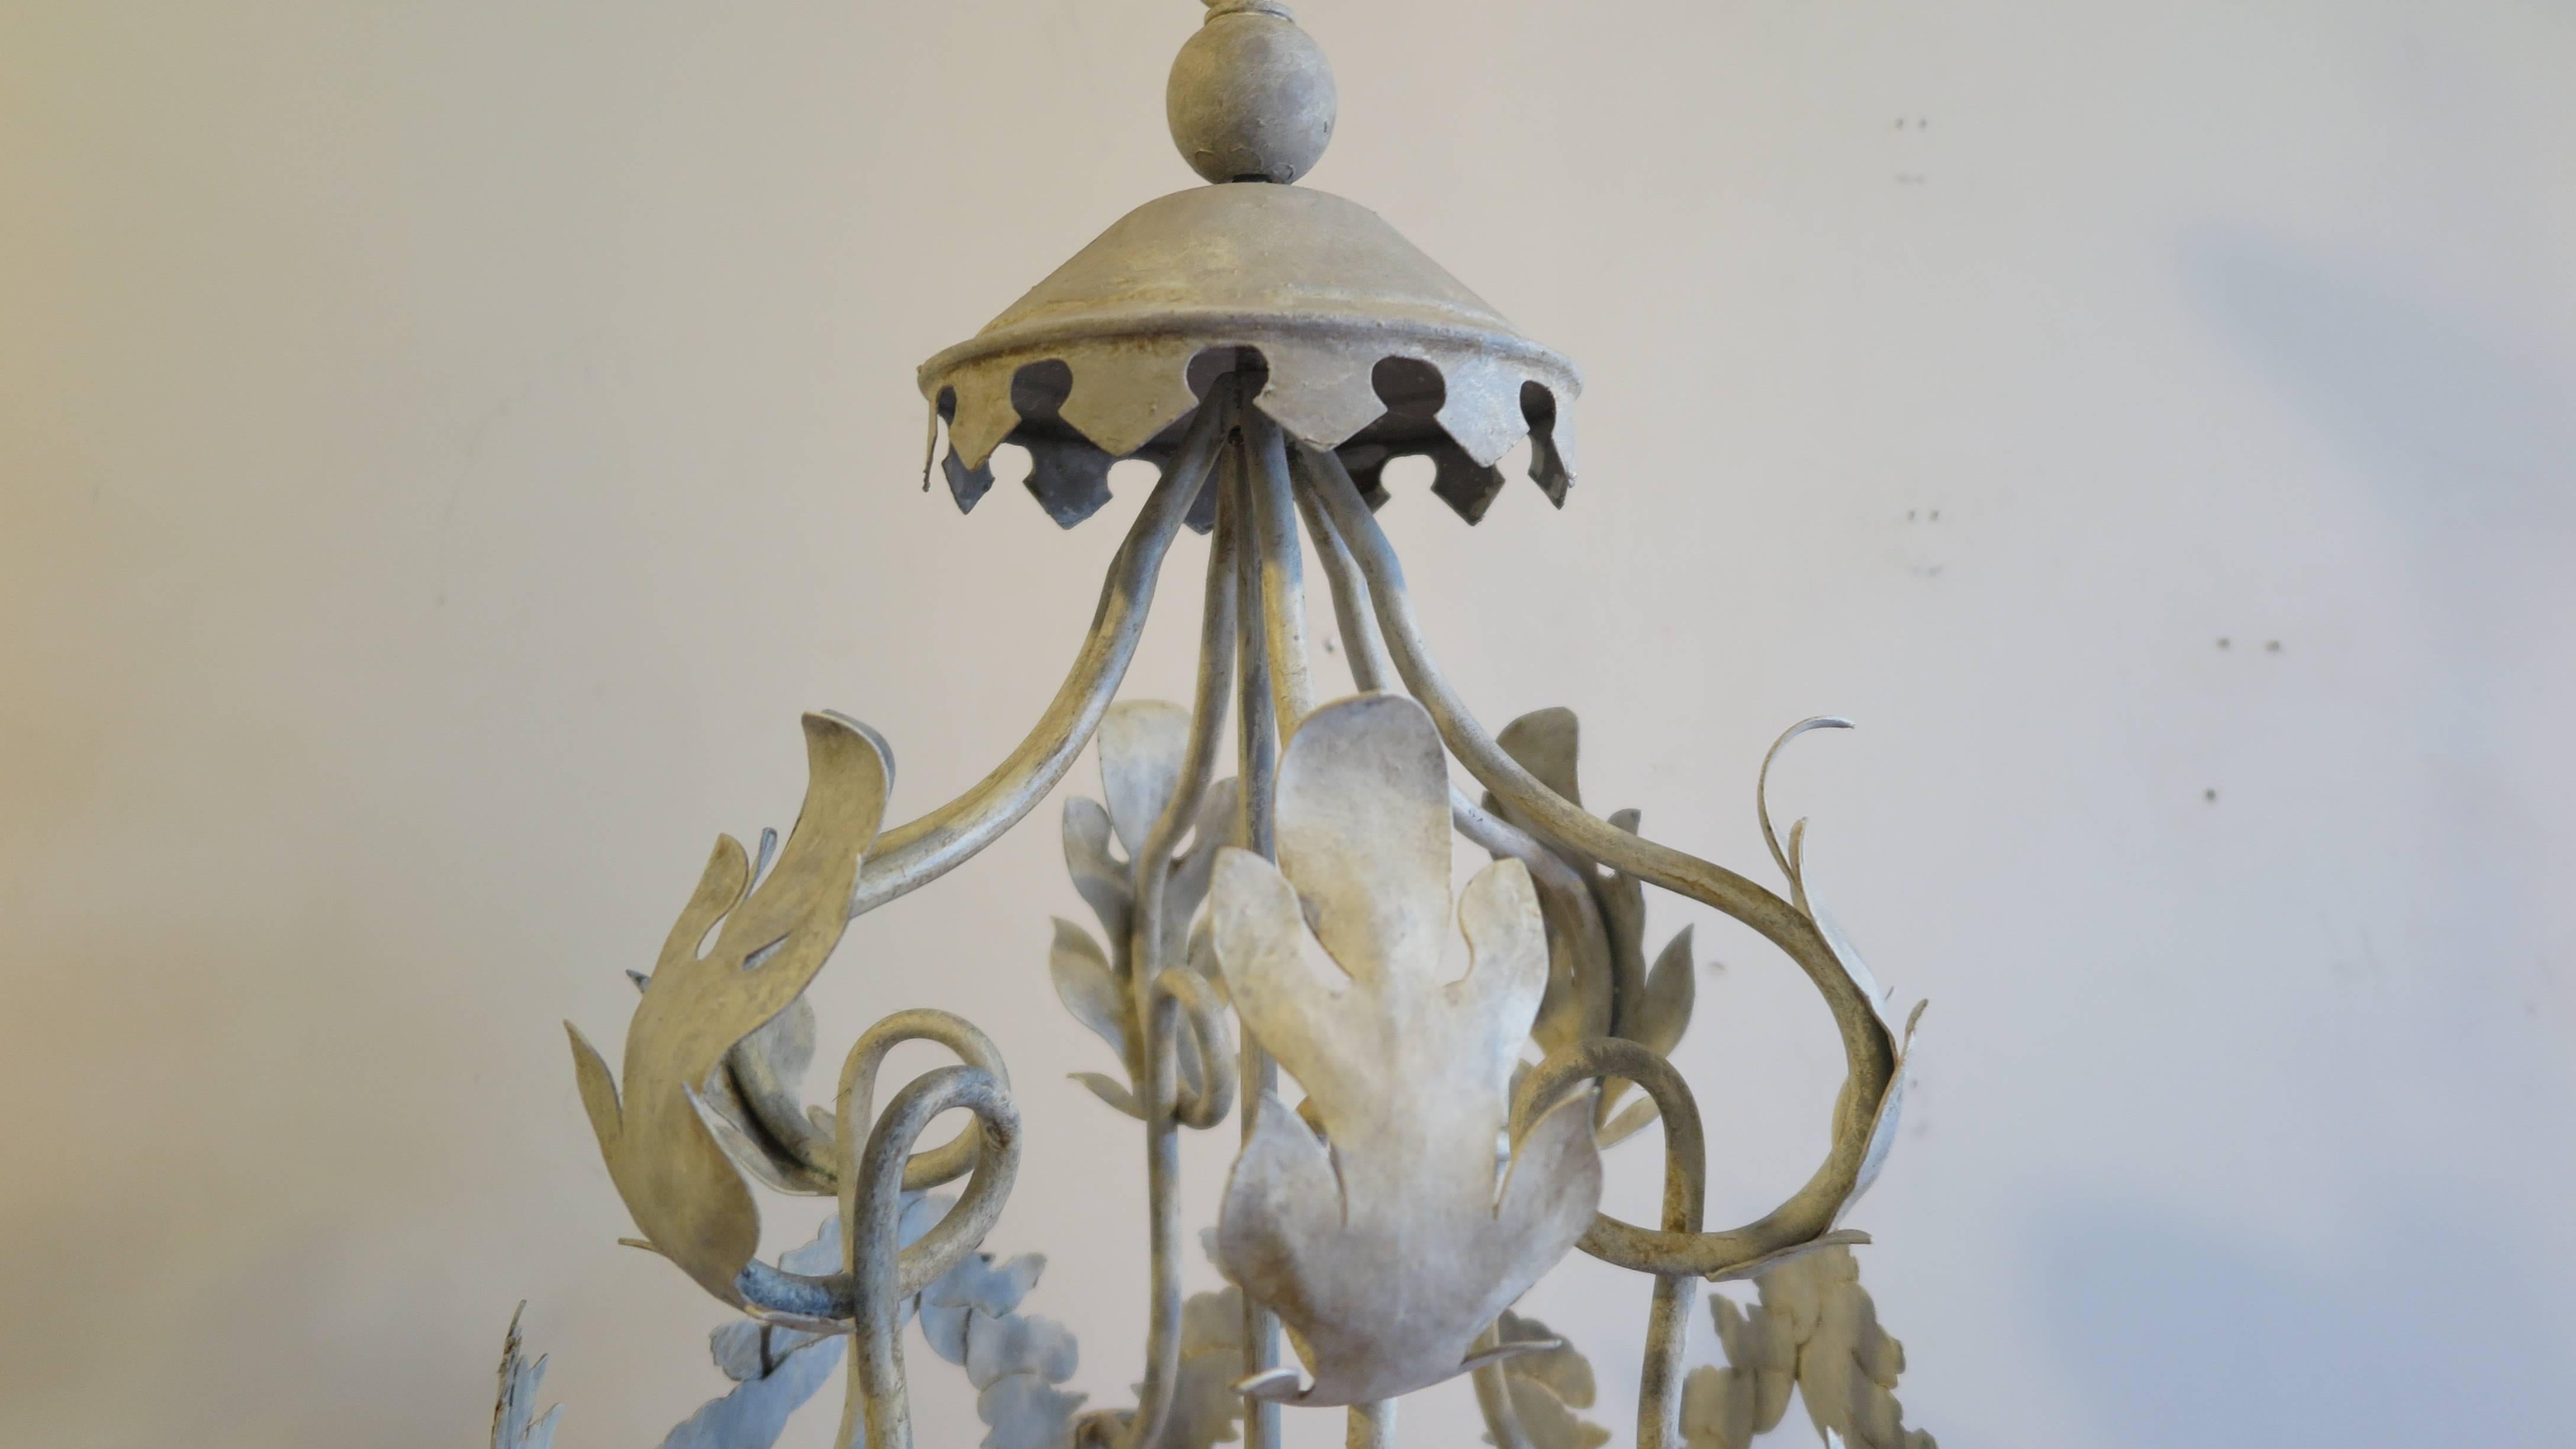 french lantern chandelier